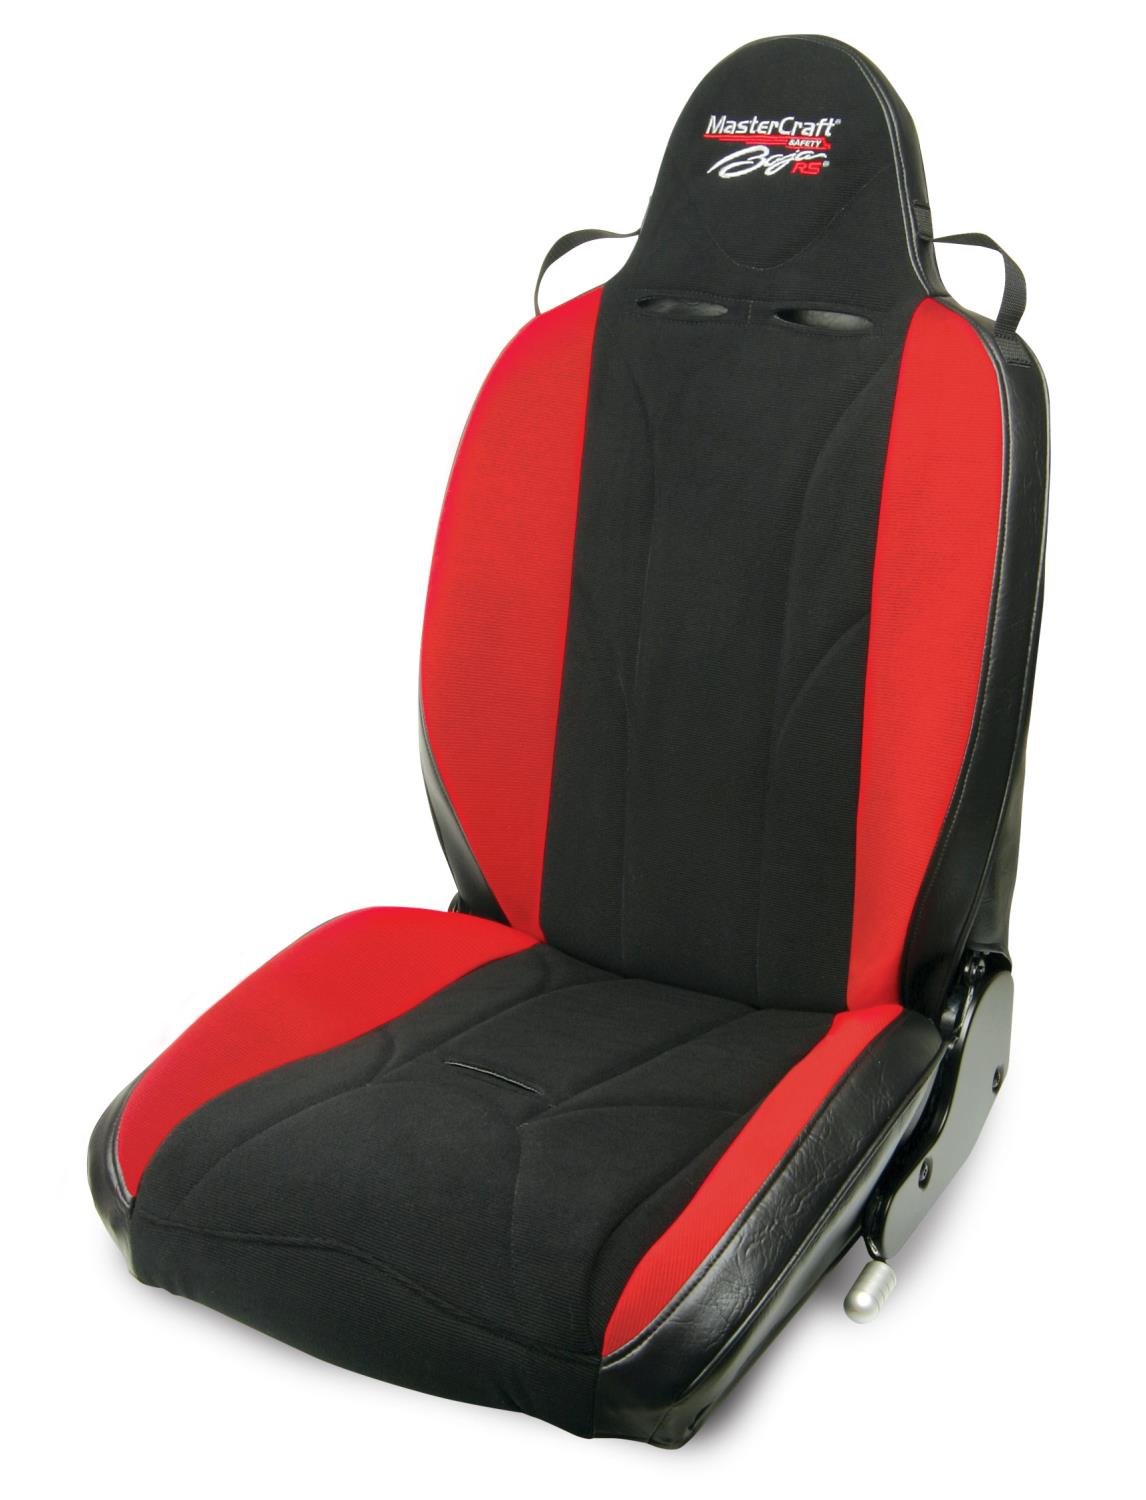 504022 MasterCraft Baja RS w/Fixed Headrest, Black w/Black Center & Red Side Panels, Recliner Lever Left, w/BRS Stitch Pattern